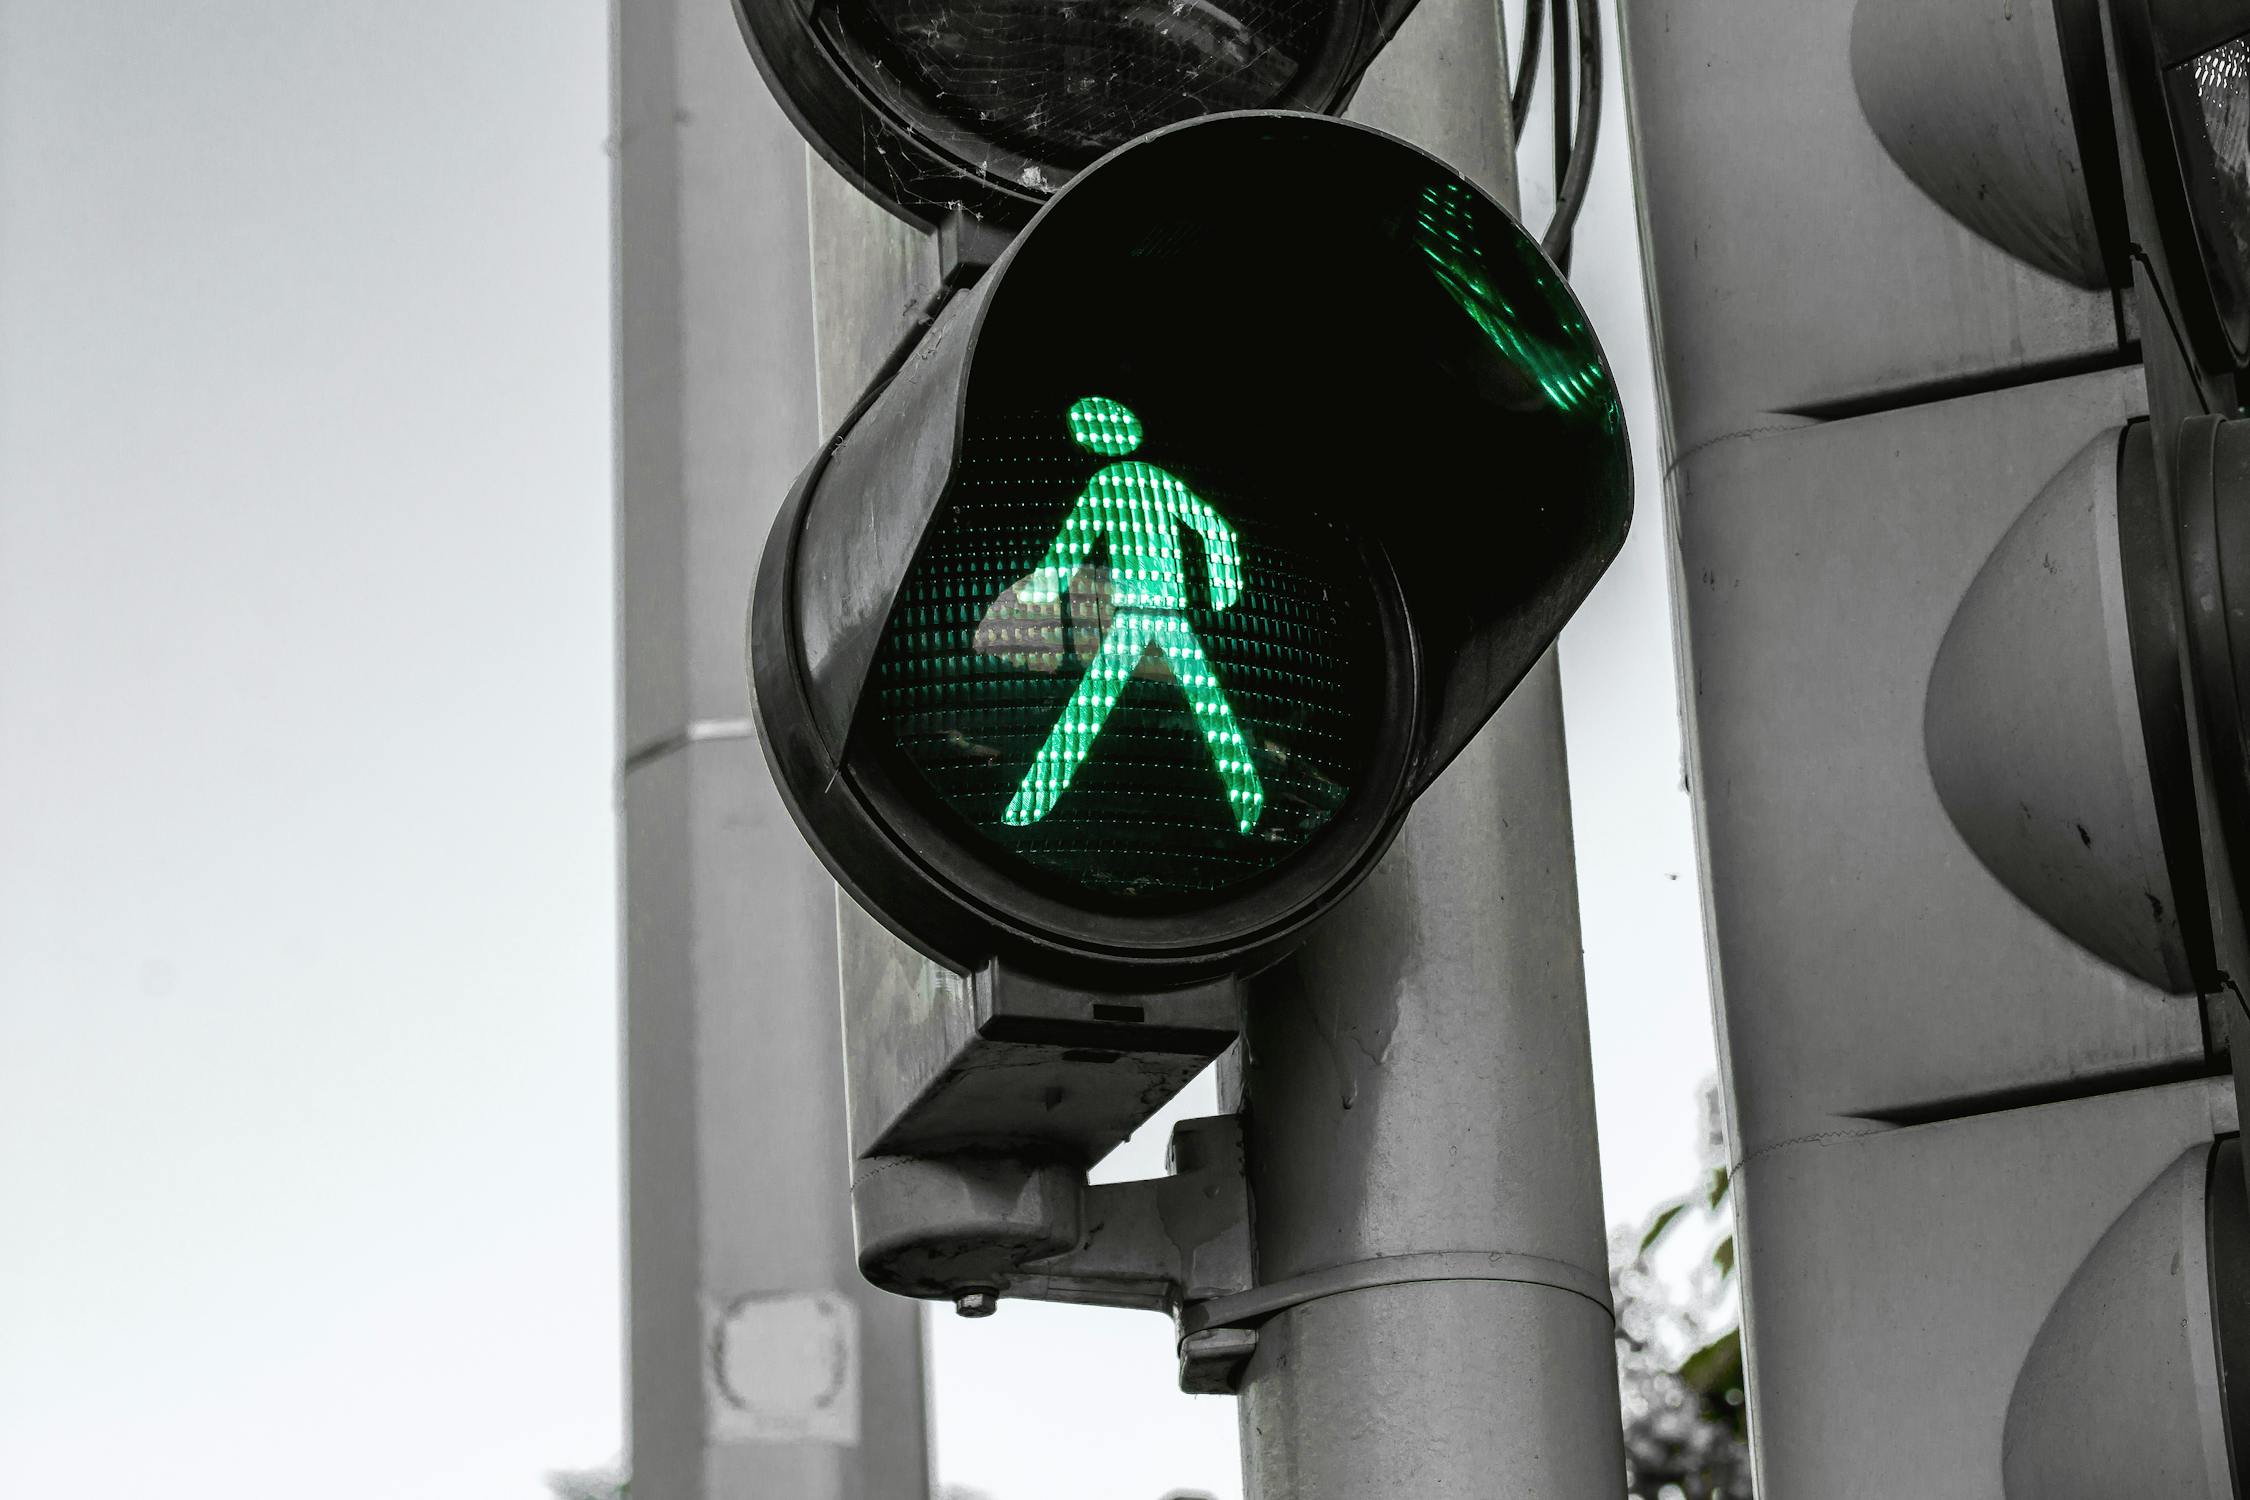 USDOT Announces Pedestrian Safety Plan After 2020 Spikes in Pedestrian Deaths